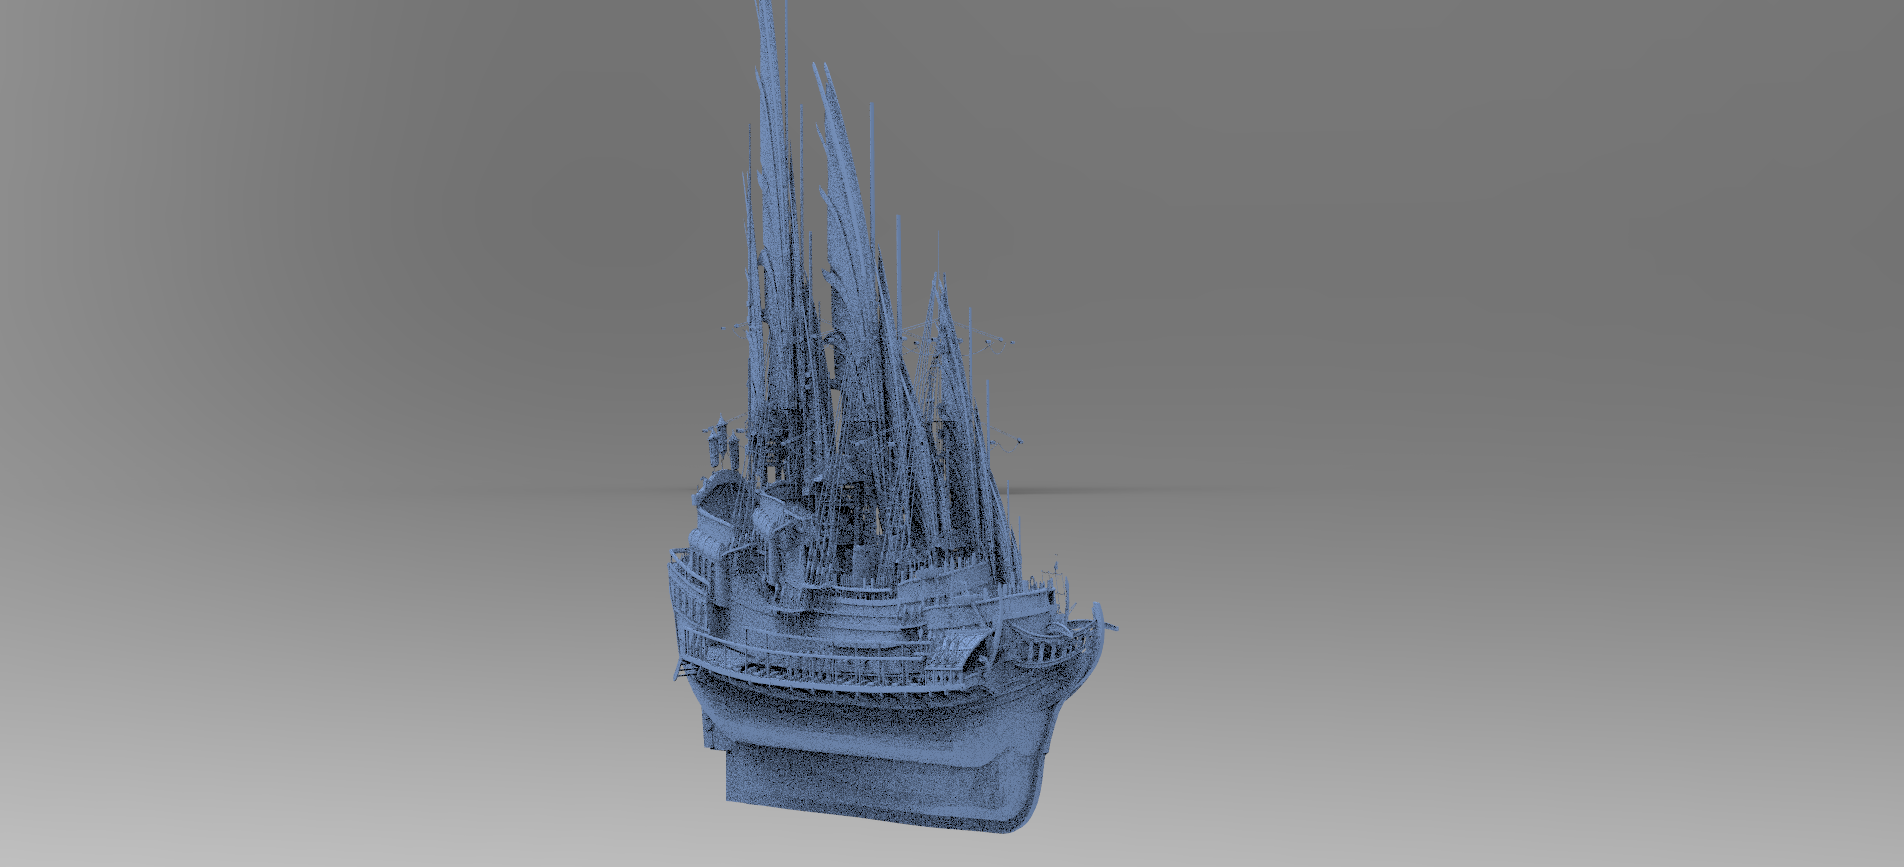 untitled.893.png Download OBJ file Pirate Ship advanced • 3D printer template, aramar